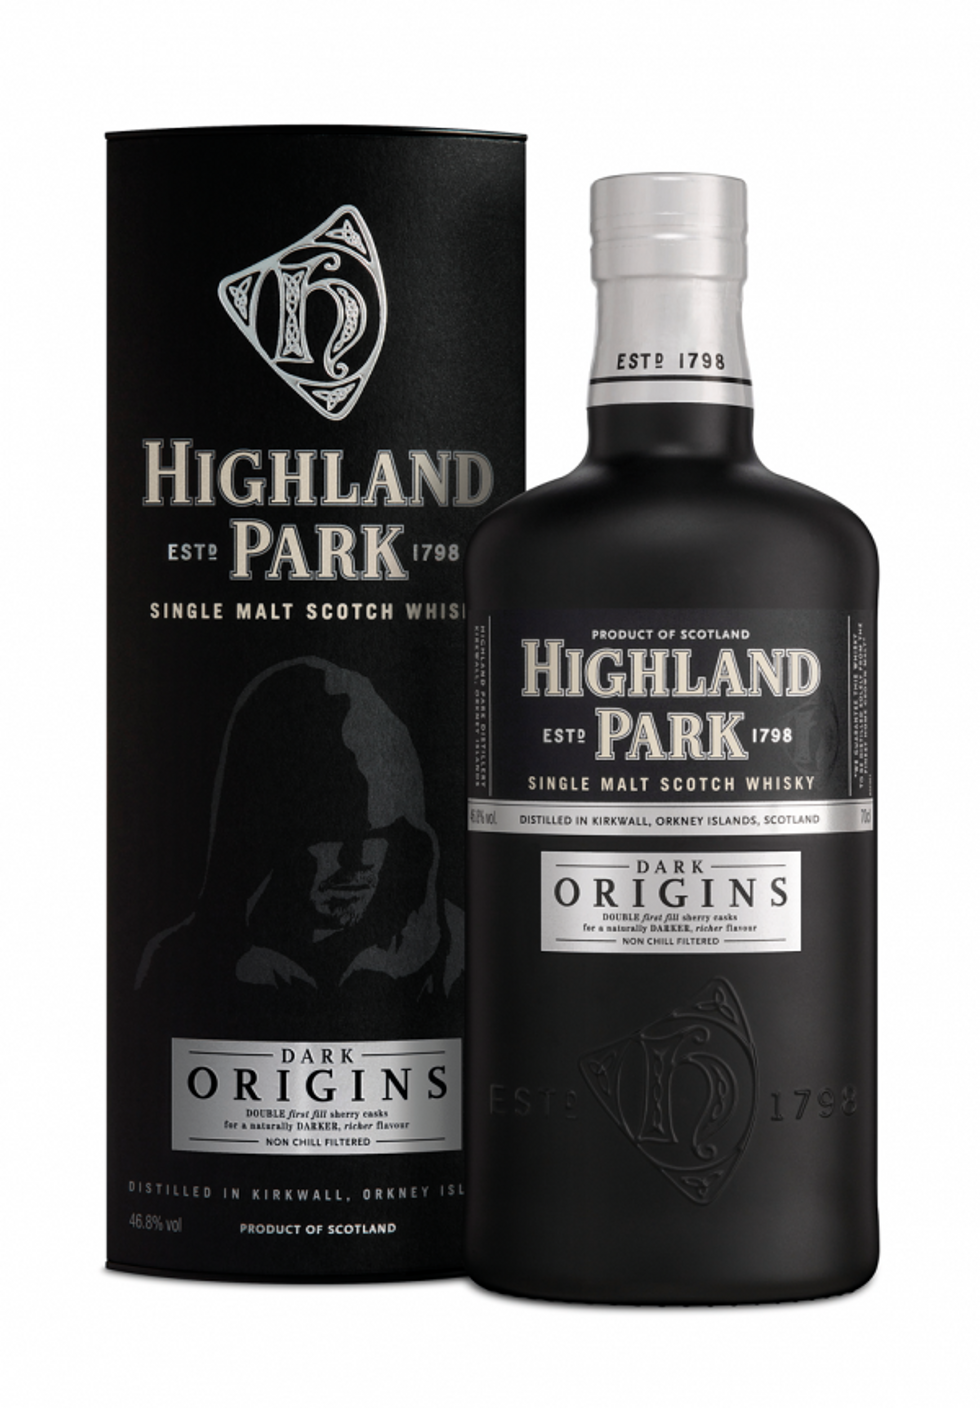 Hp-dark-origins-bottle-pack-70cl-1000-600x862